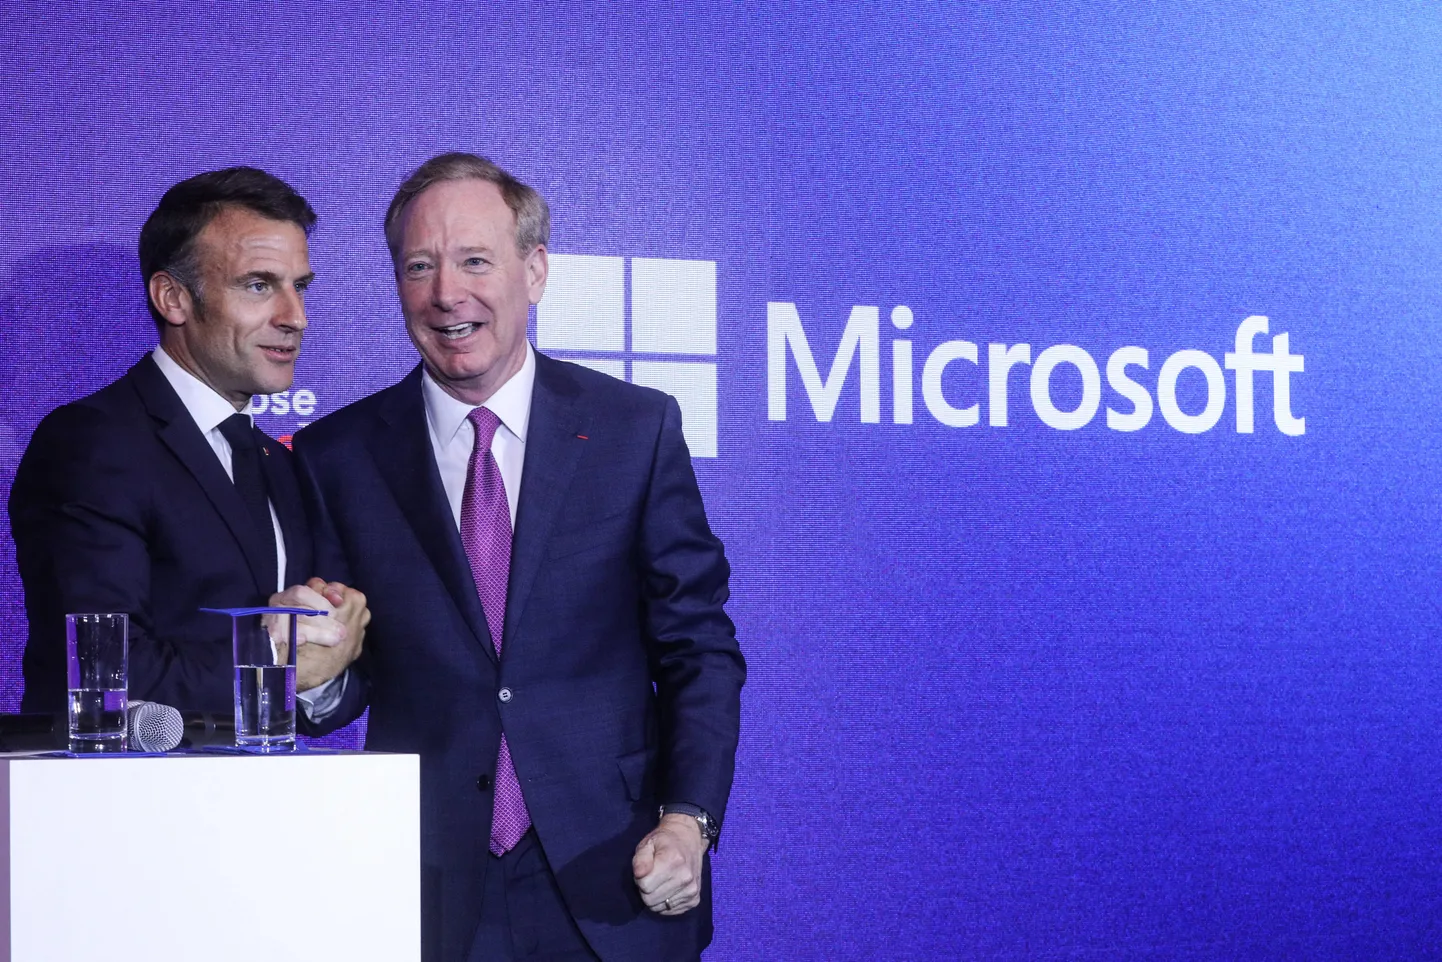 Prantsuse president Emmanuel Macron ja Microsofti tegevjuht Brad Smith.